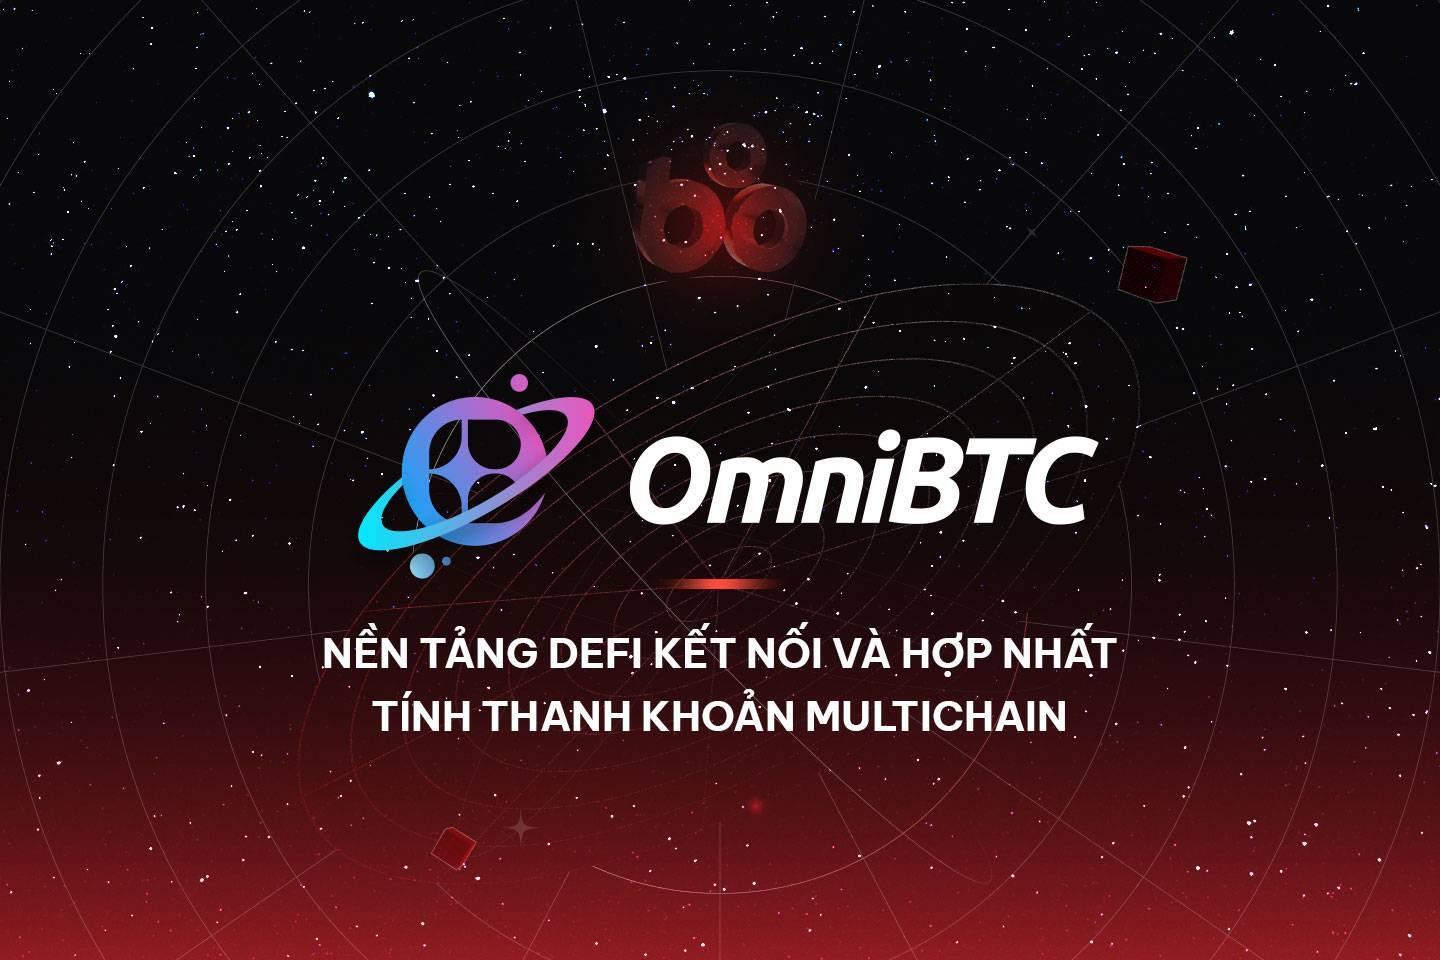 omnibtc-nen-tang-defi-ket-noi-va-hop-nhat-tinh-thanh-khoan-multichain